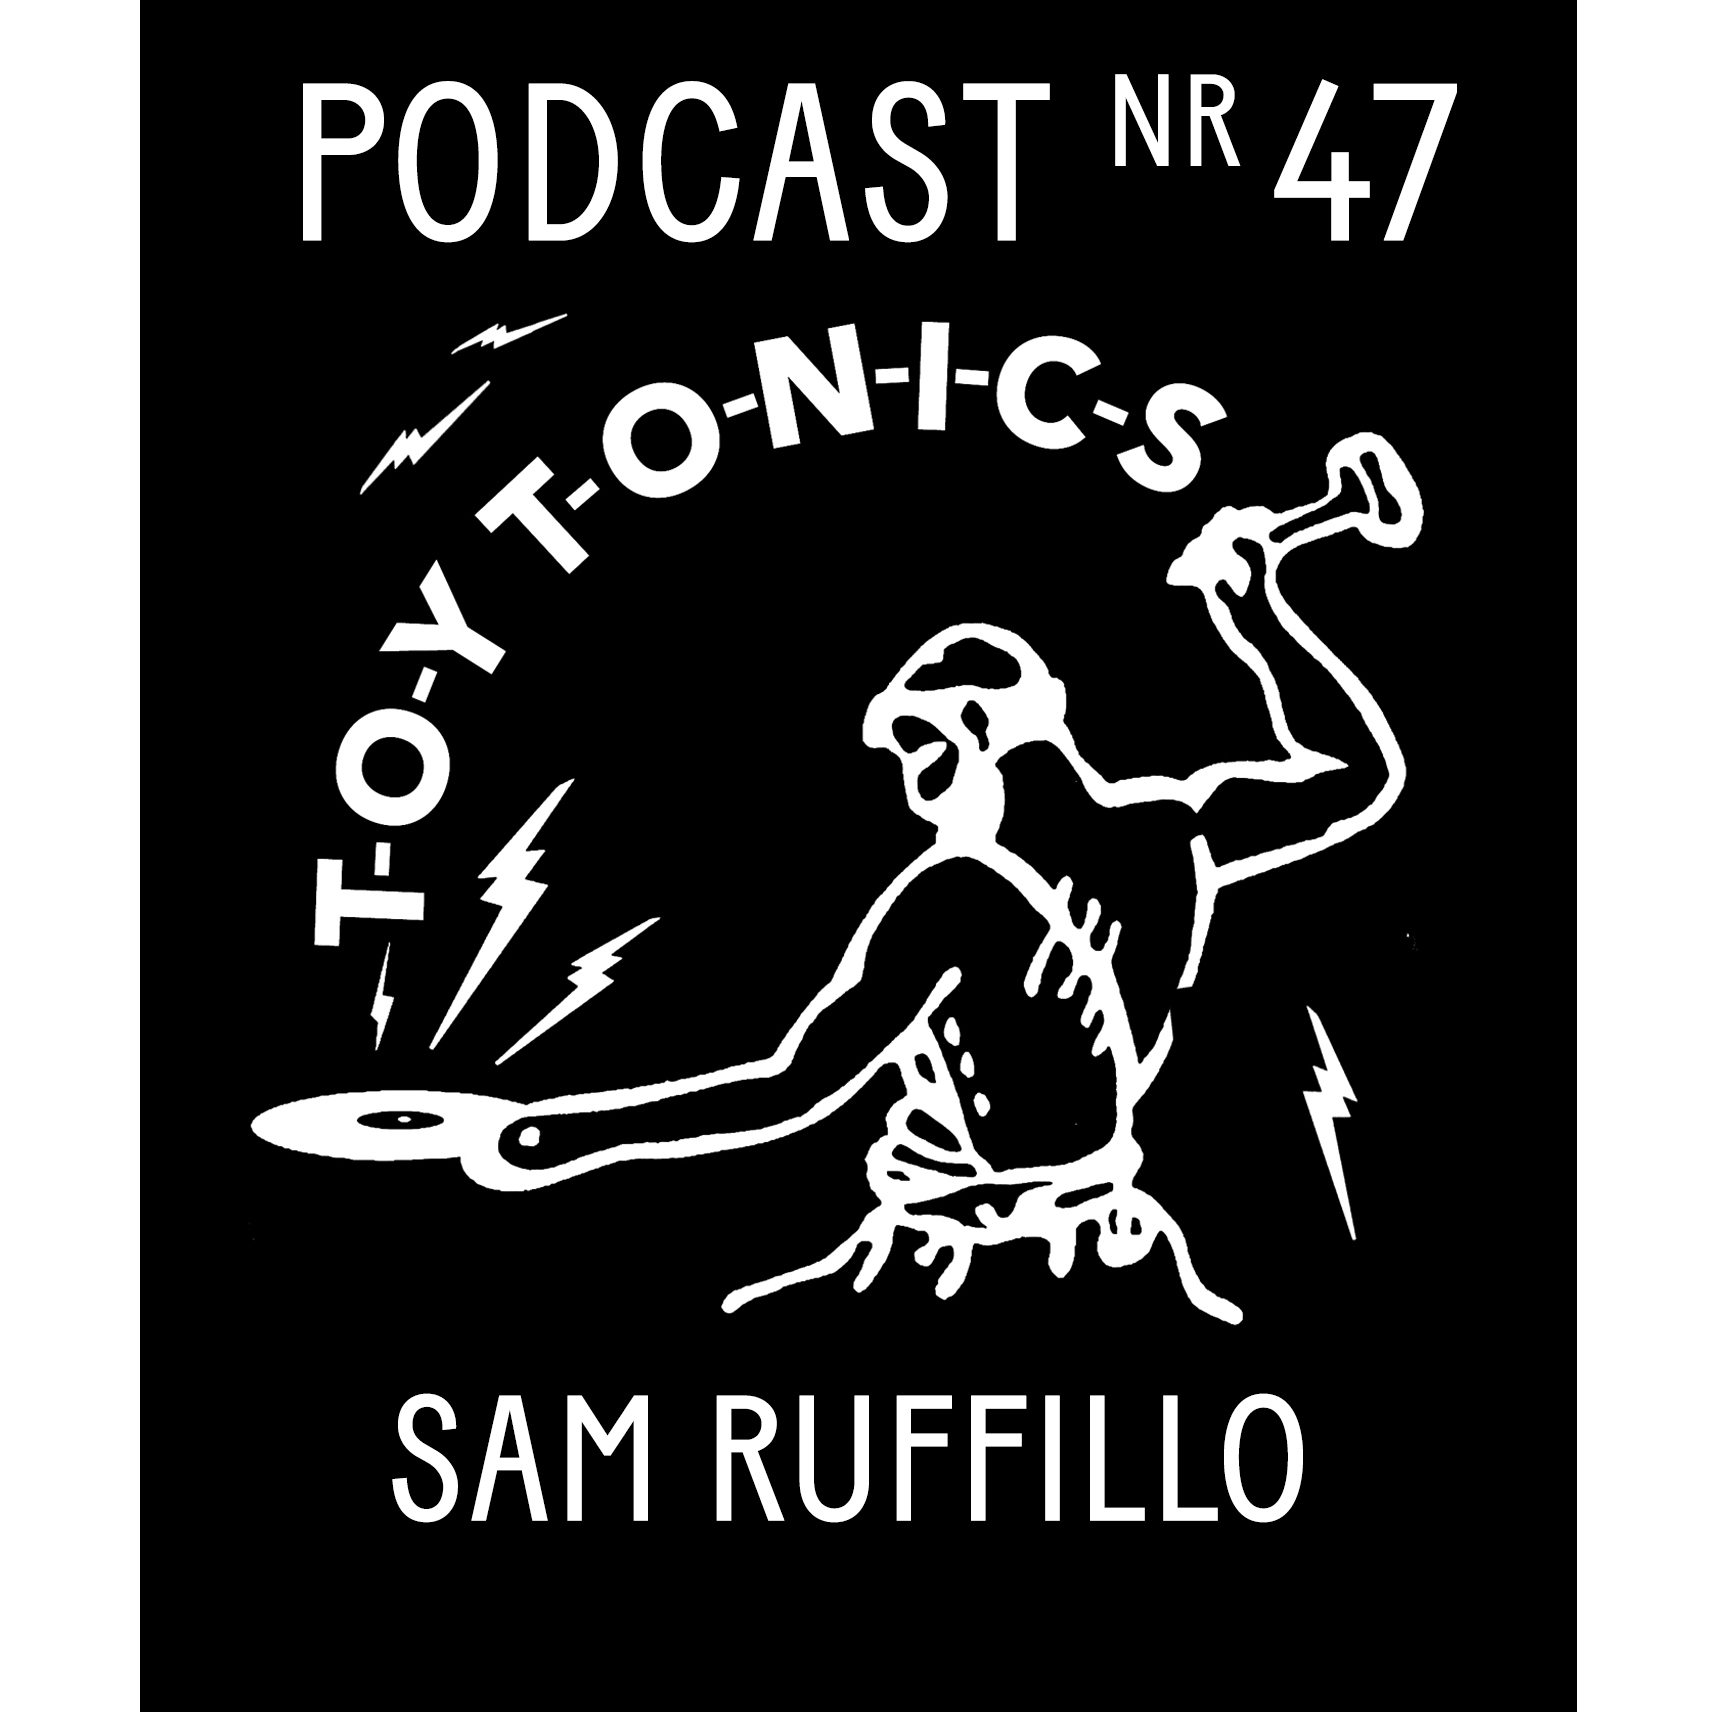 PODCAST NR 47 - Sam Ruffillo